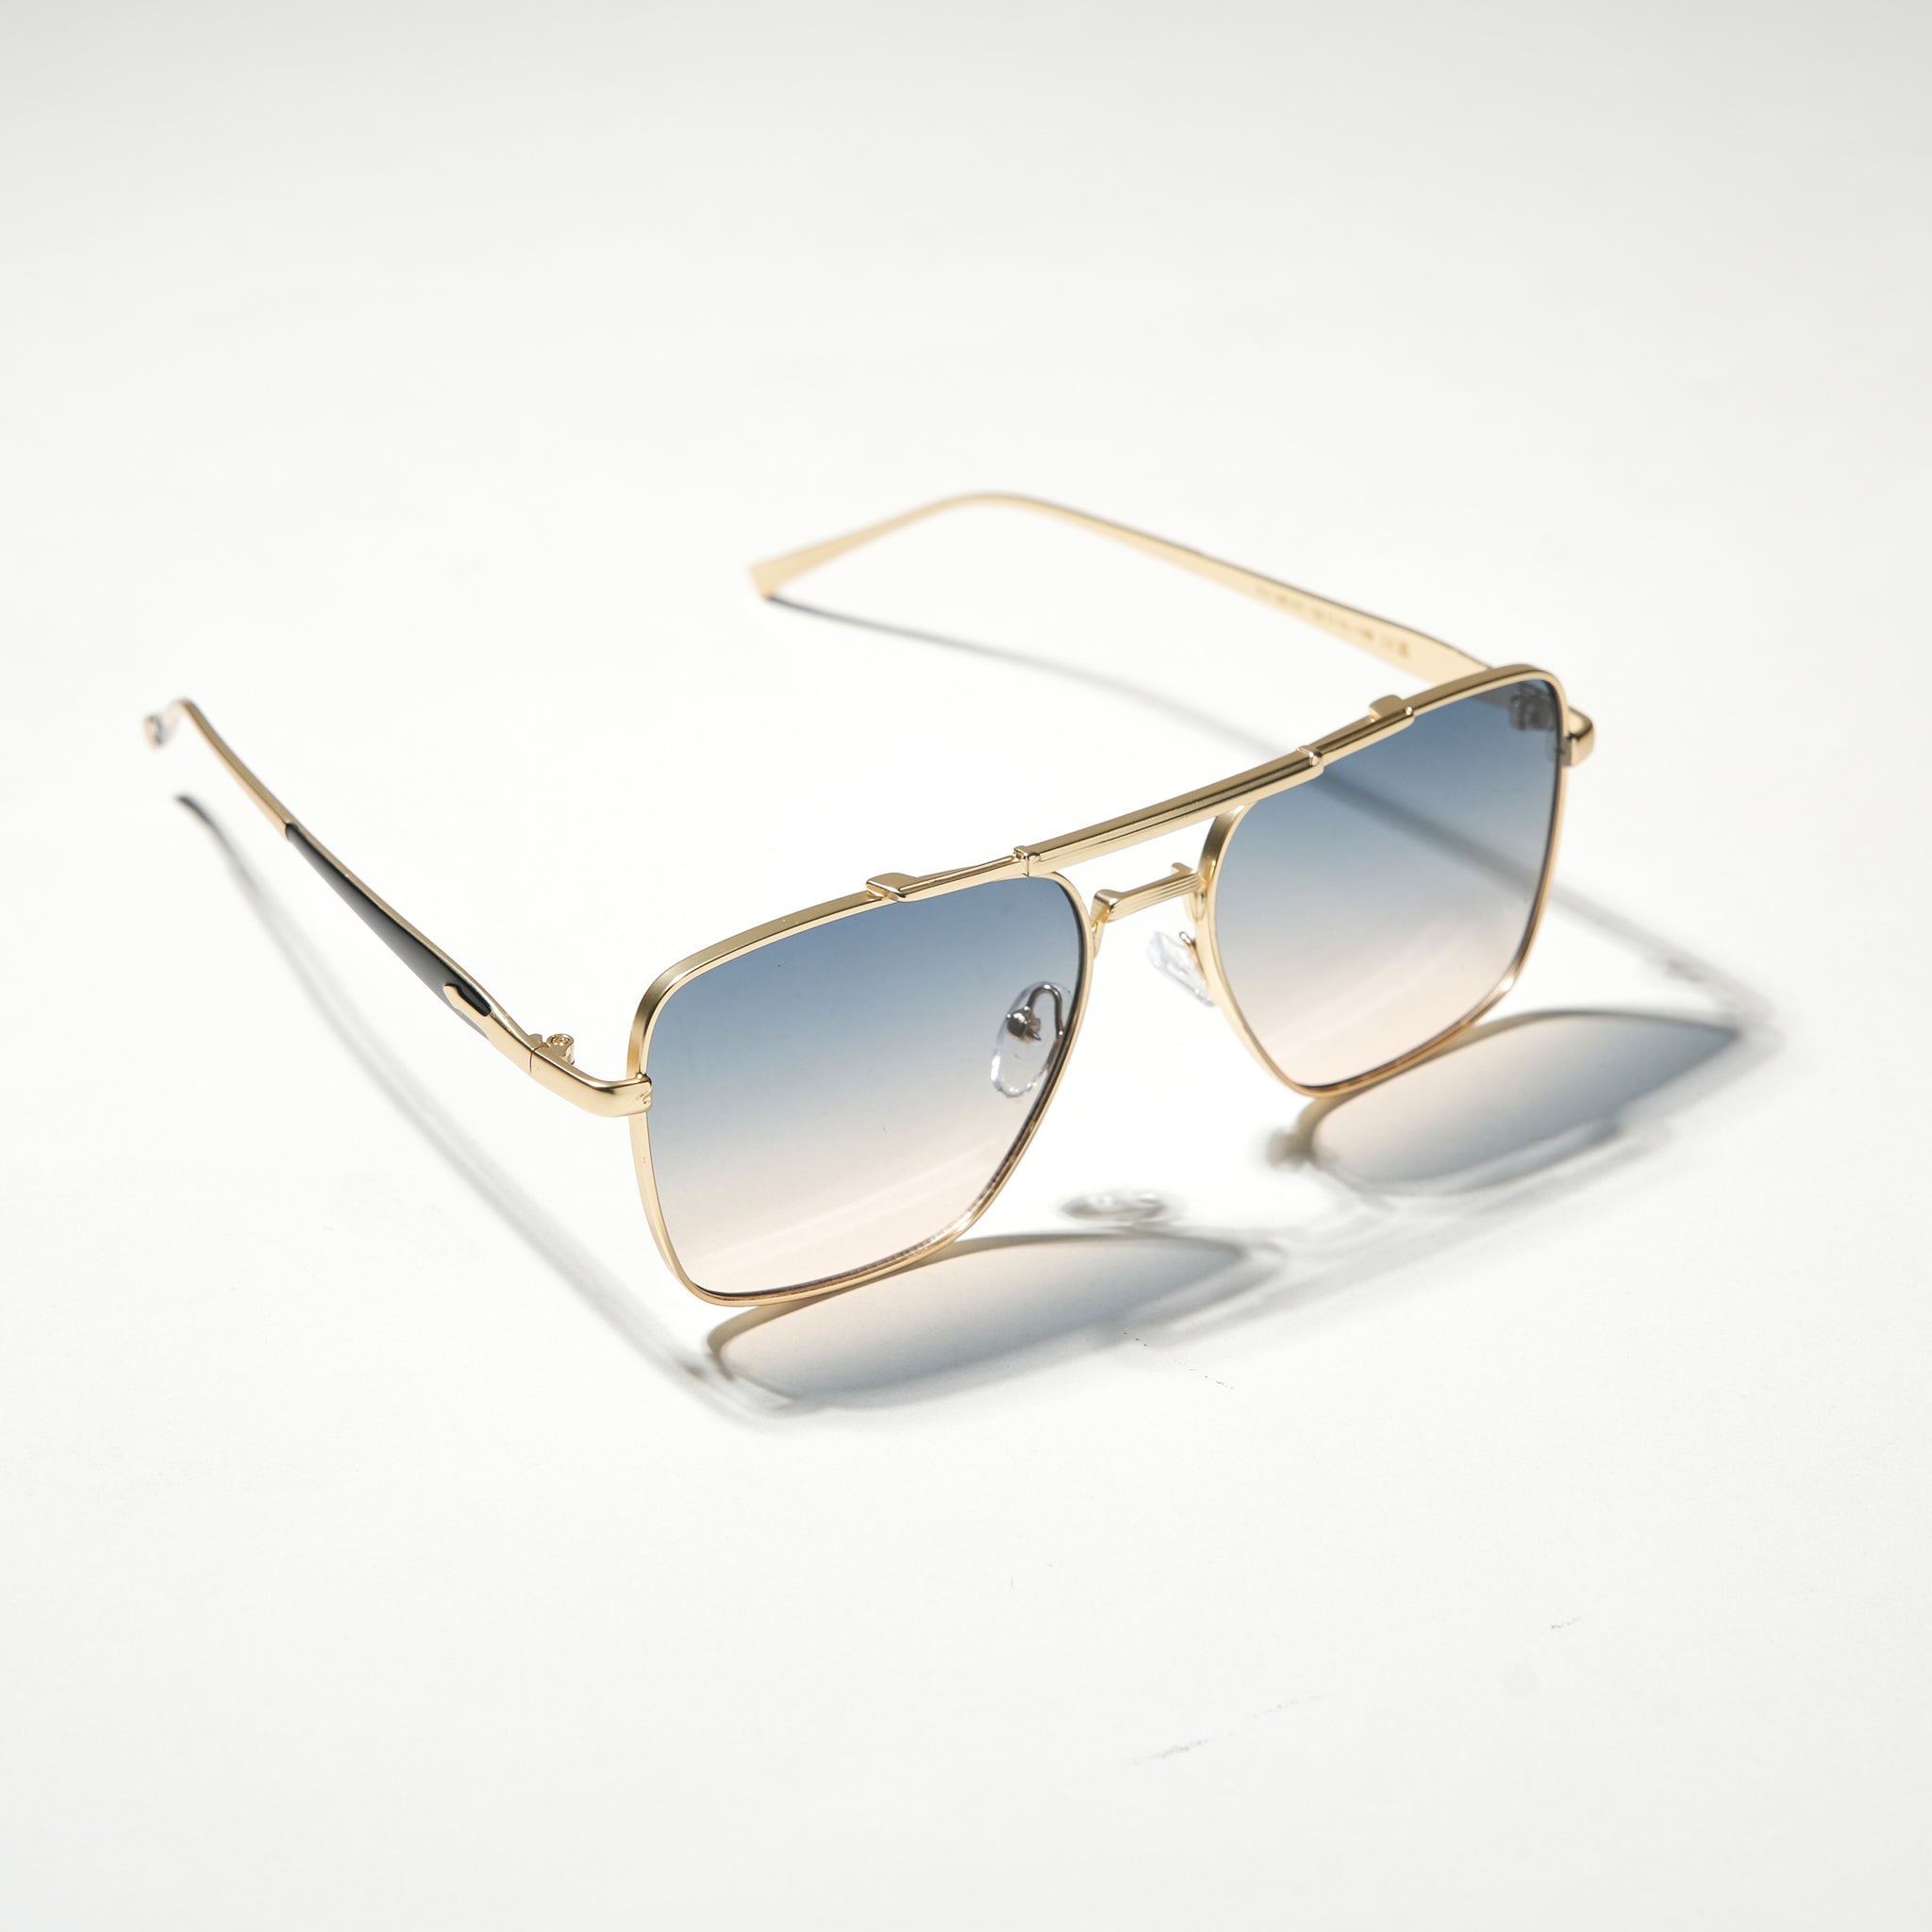 Chokore Retro Double Bridge Double Beam Sunglasses (Blue & Gold)